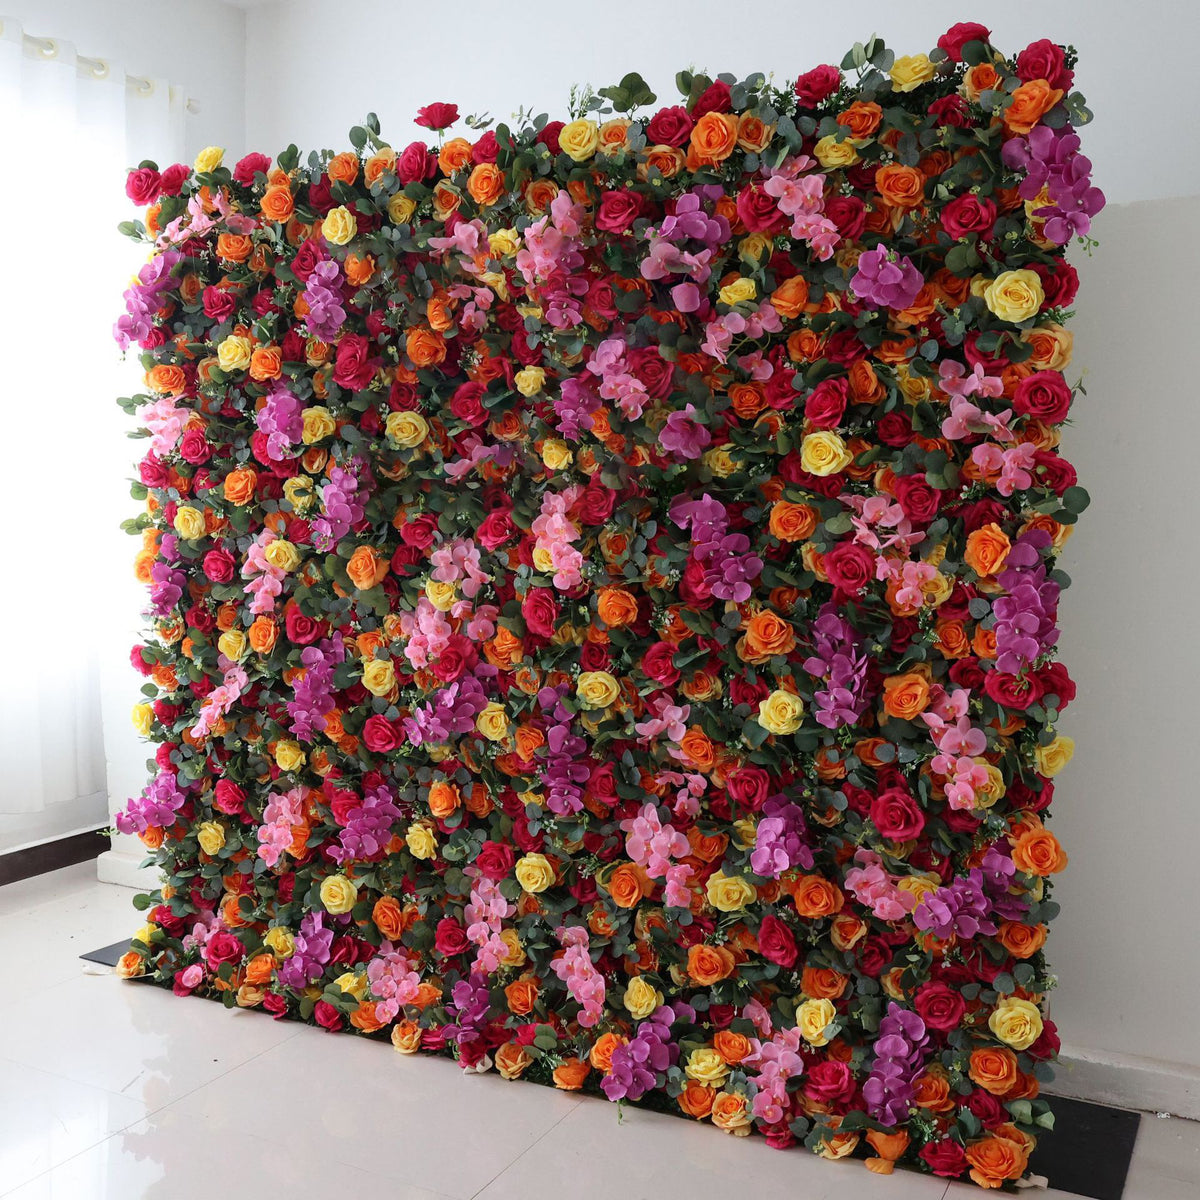 3D Artificial Flower Wall Arrangement Wedding Party Birthday Backdrop Decor HQ1308